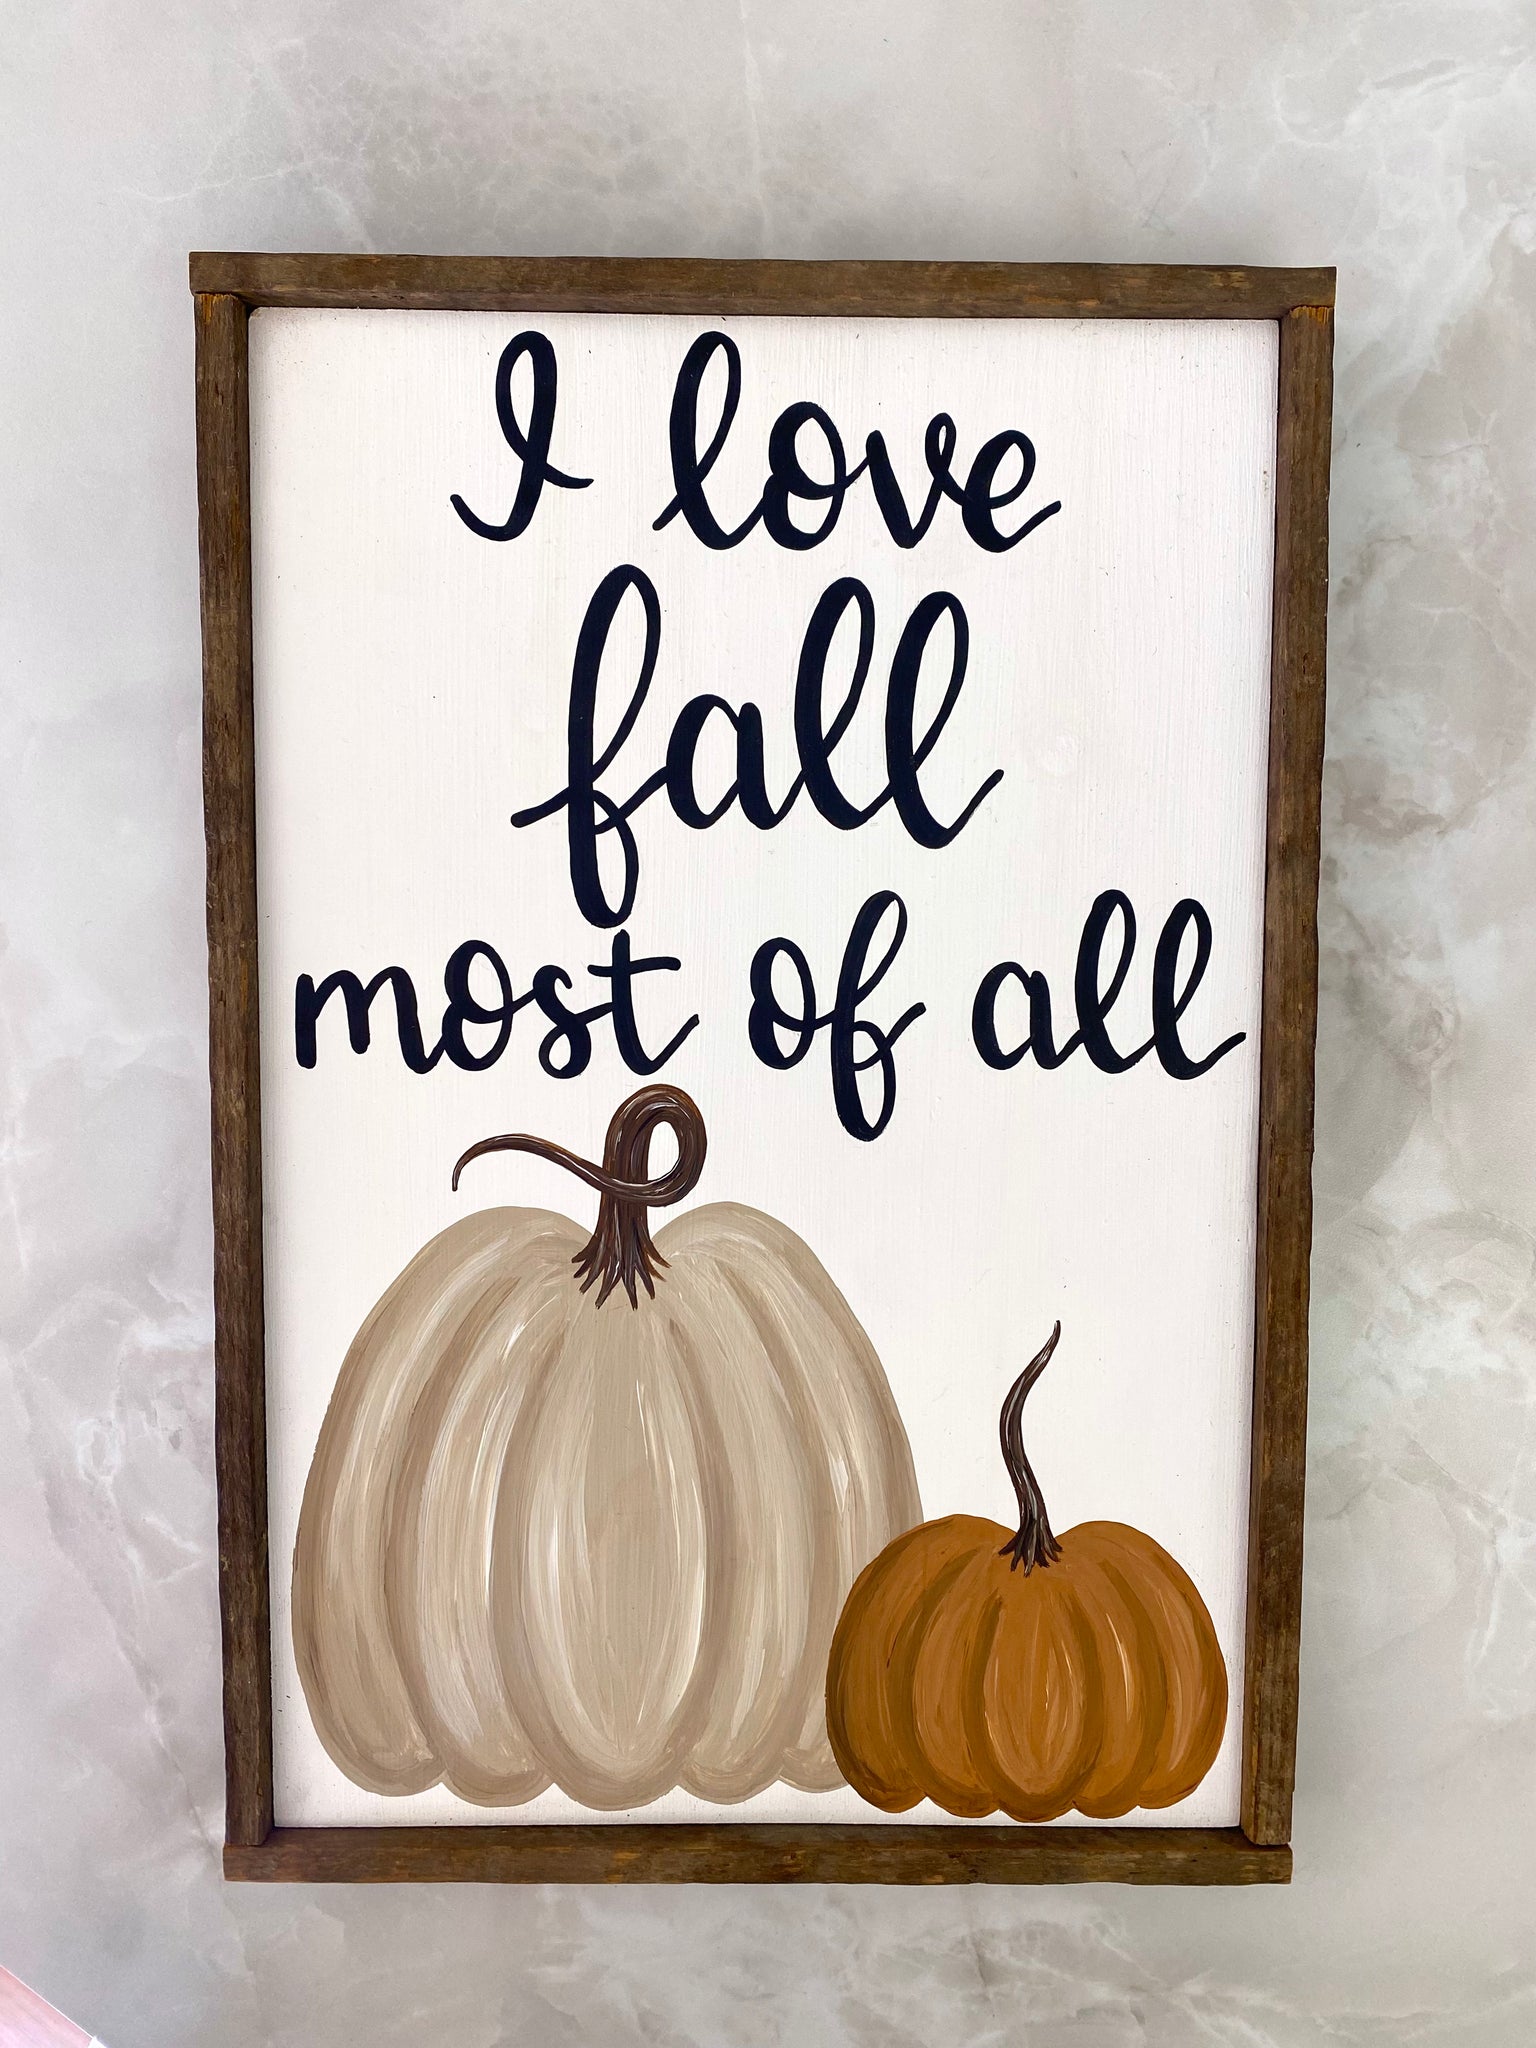 I love fall (pumpkins)